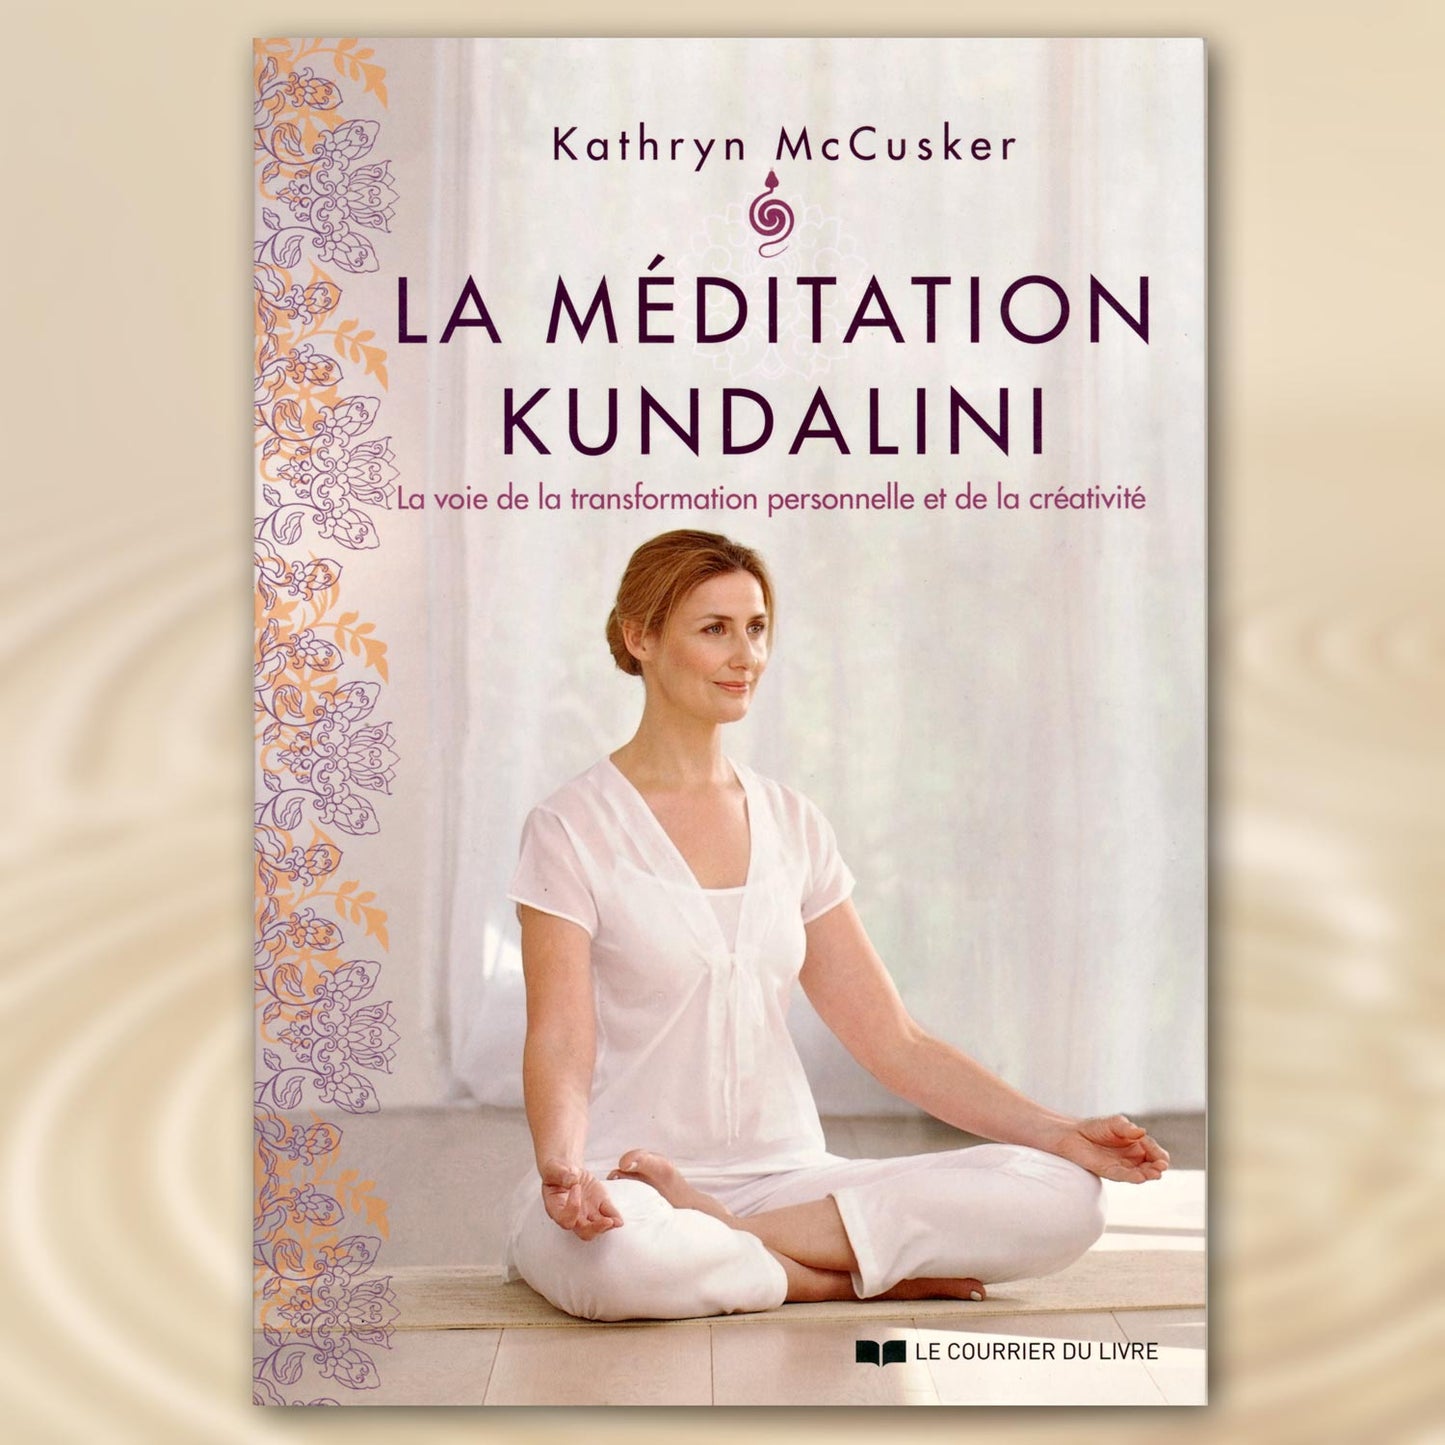 Kundalini meditation. The path to personal transformation and creativity